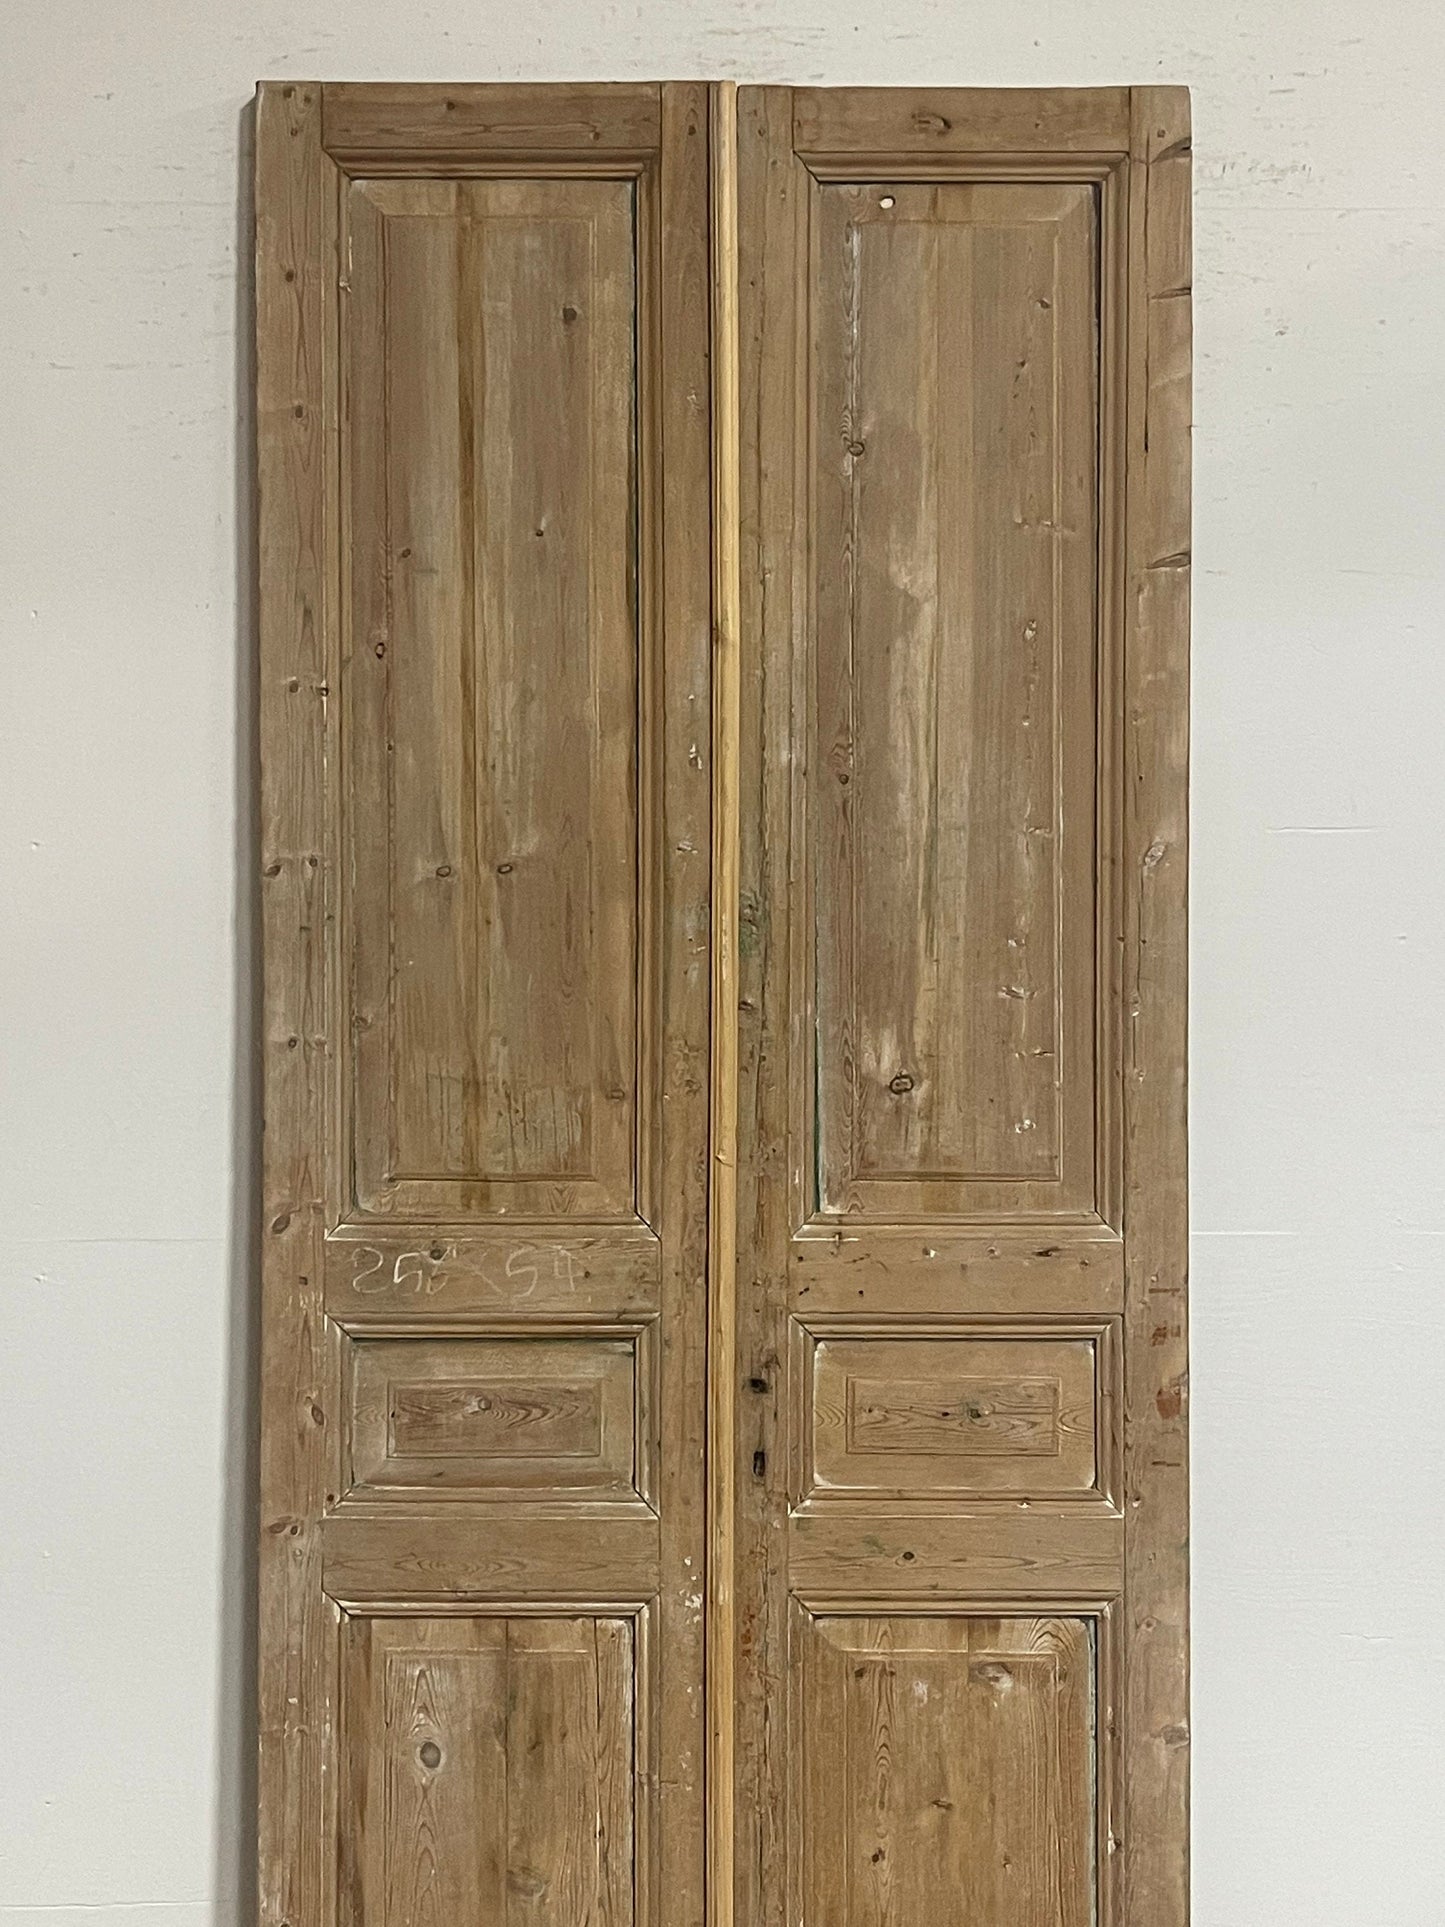 Antique French panel doors (101x42.75) G0153s